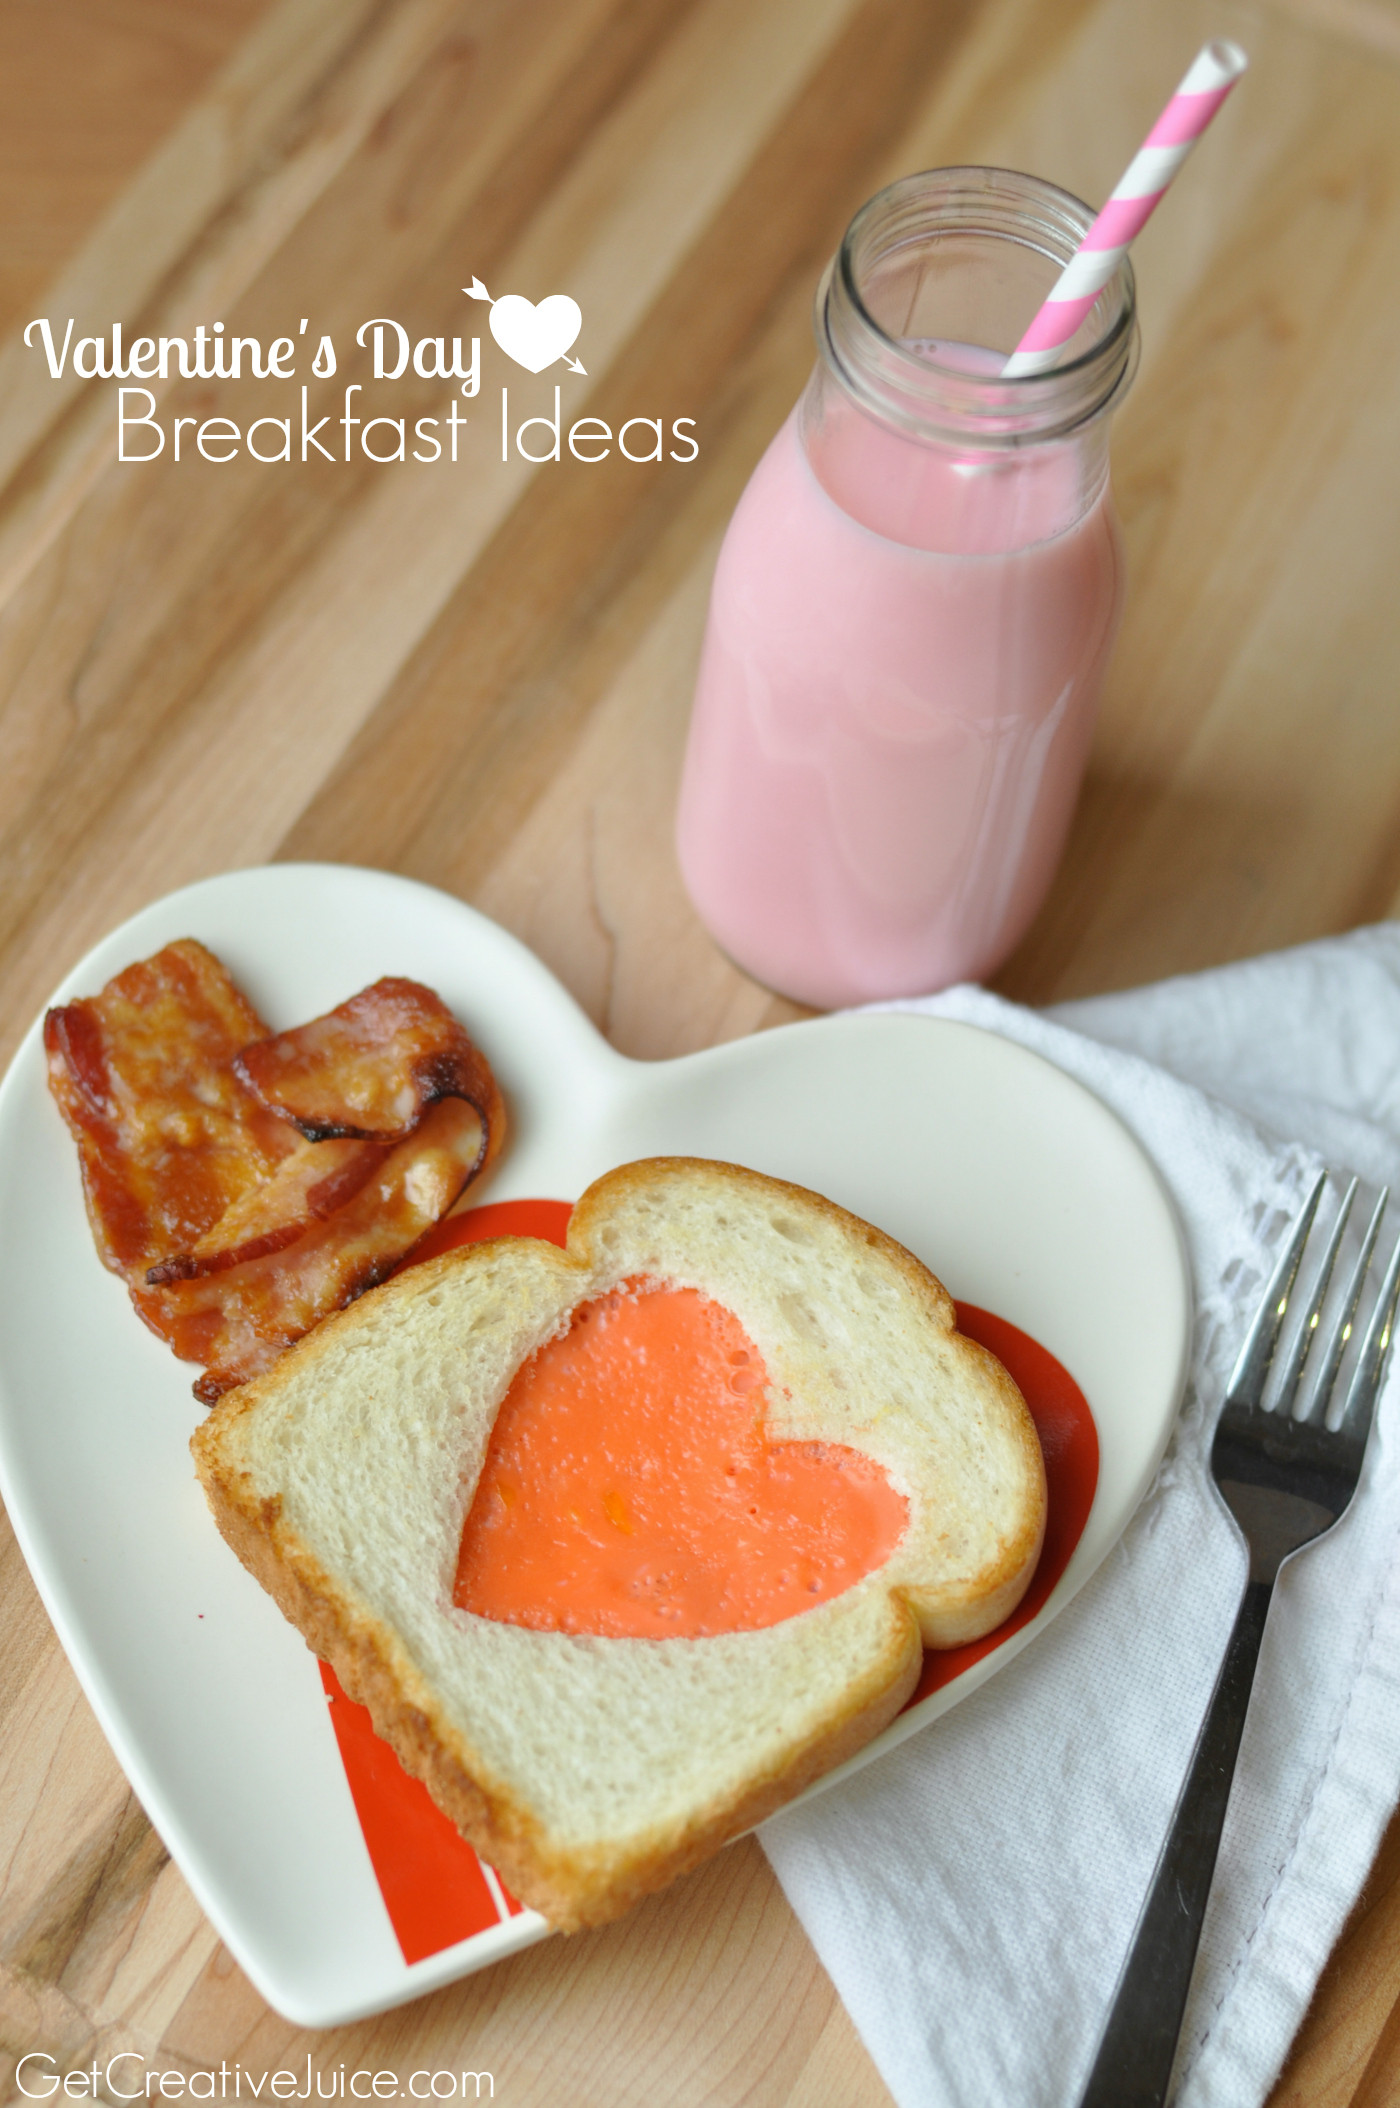 Valentine'S Day Breakfast Recipes
 More Valentine Breakfast Ideas